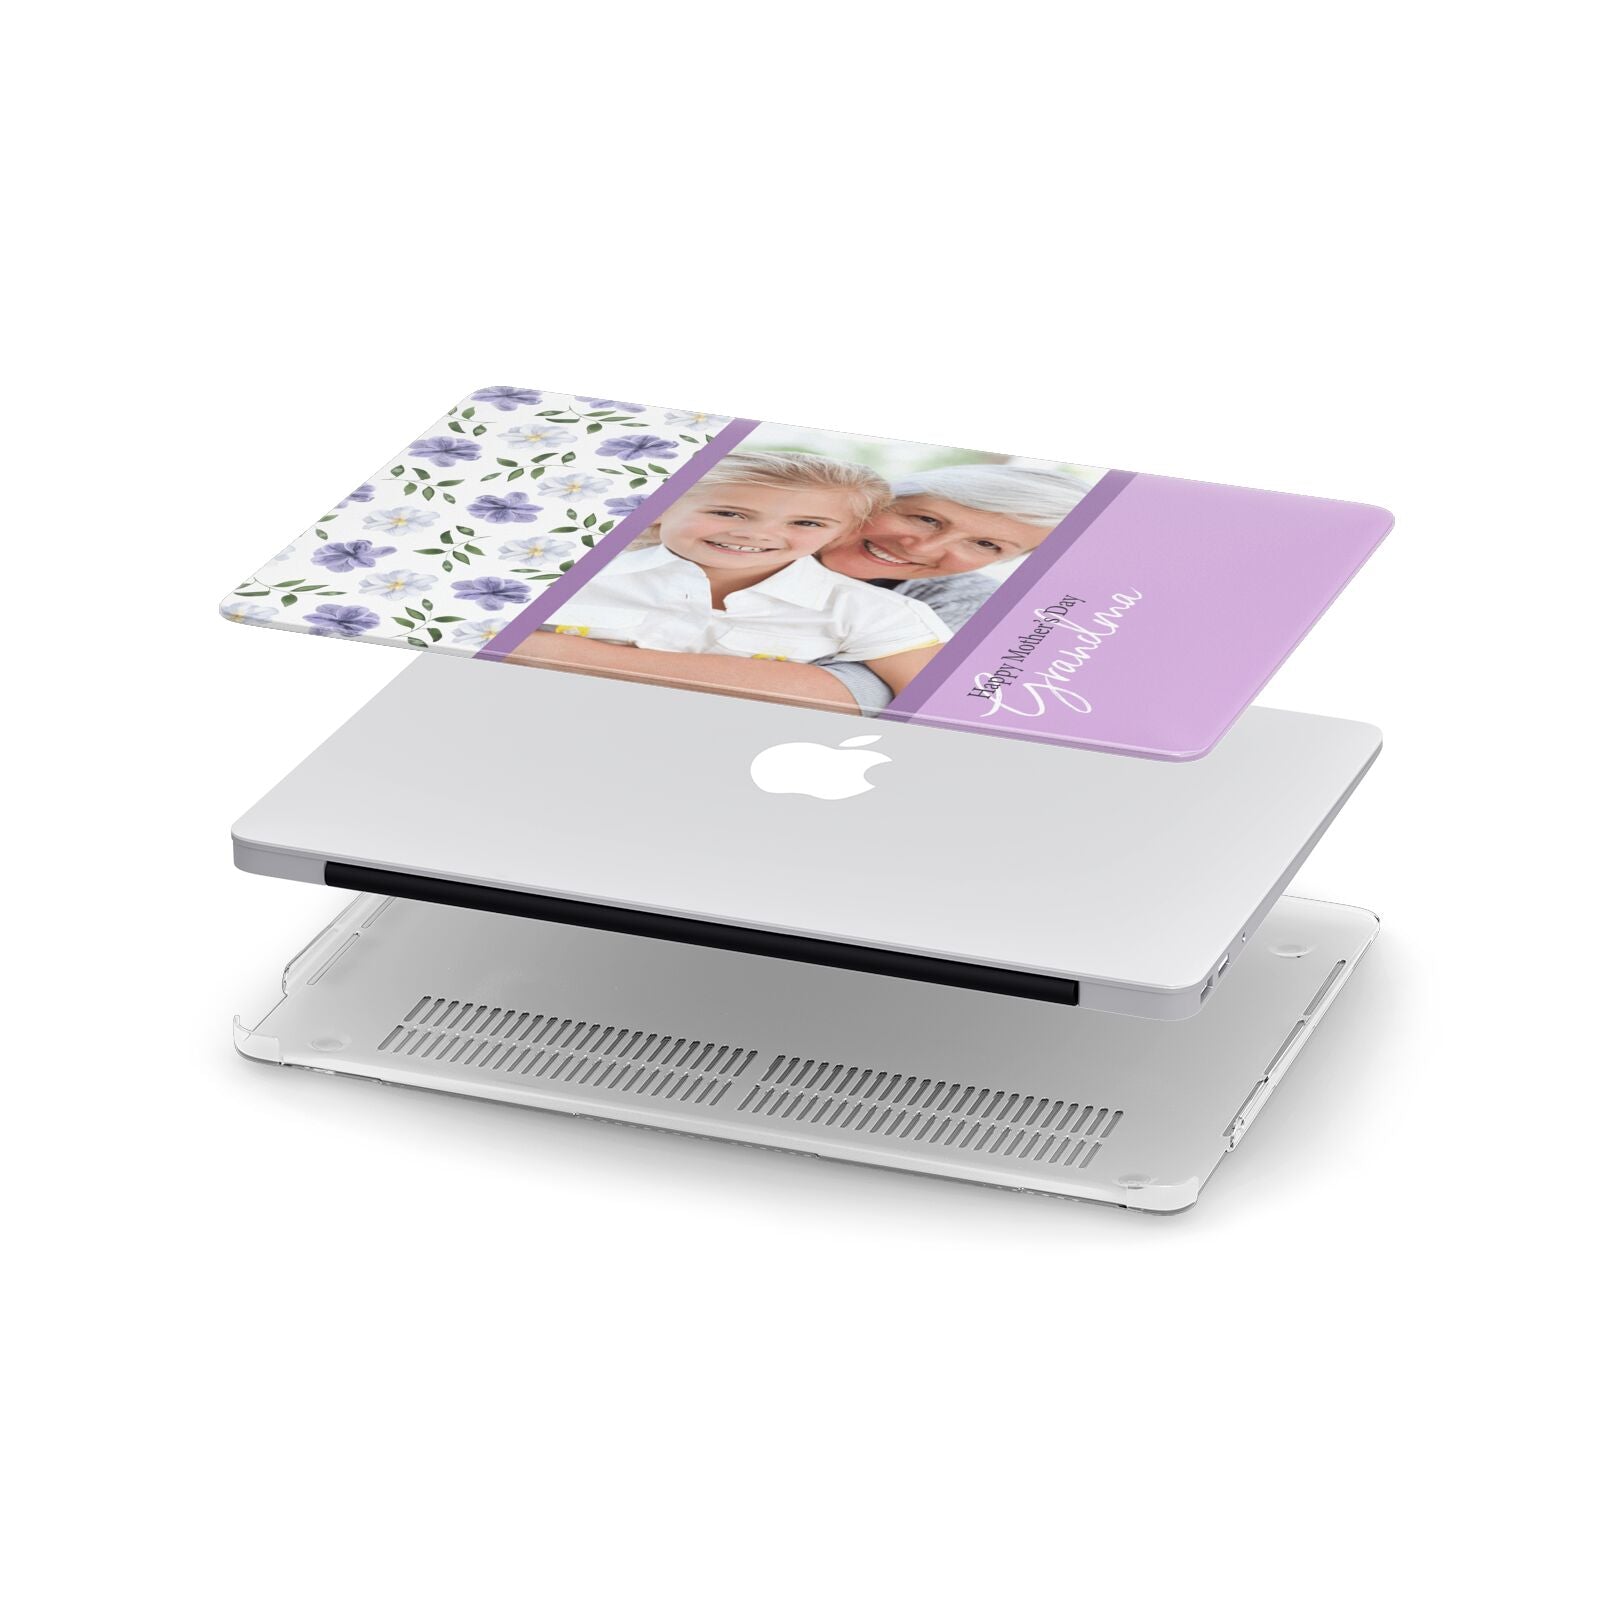 Personalised Grandma Mother s Day Apple MacBook Case in Detail